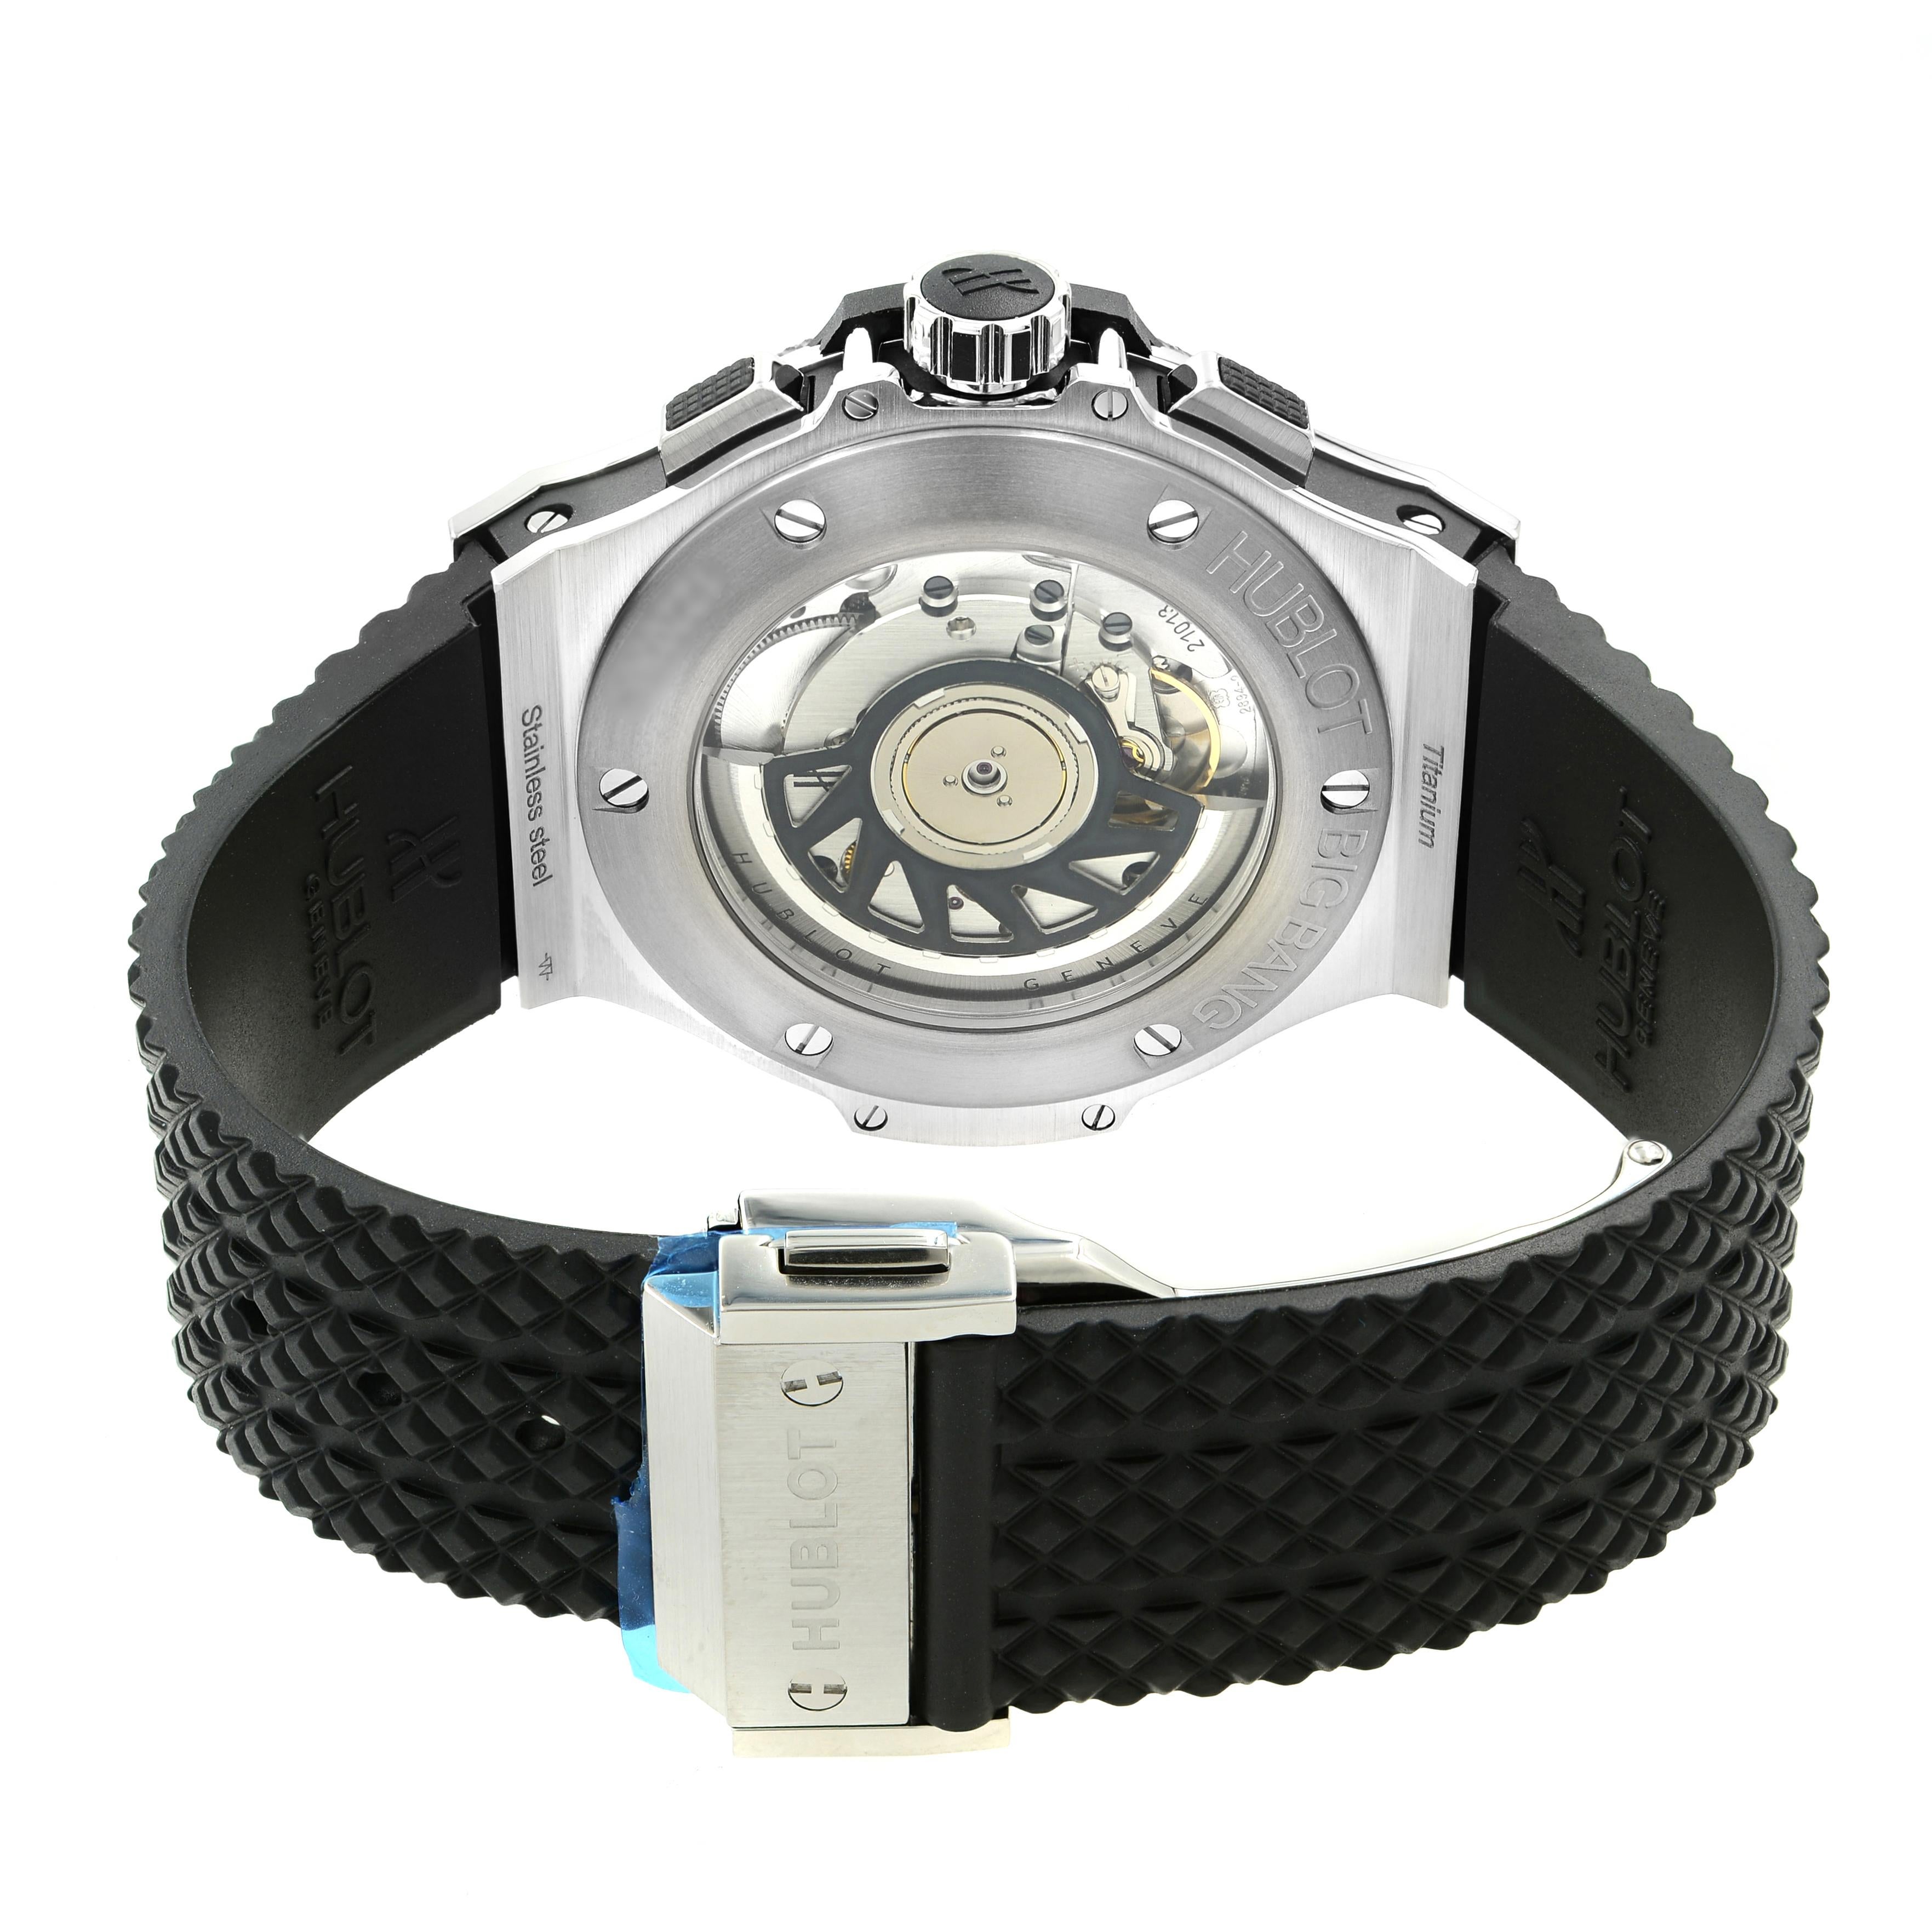 Hublot Big Bang Steel Ceramic Automatic Men’s Black Carbon Watch 341.SB.131.RX 2